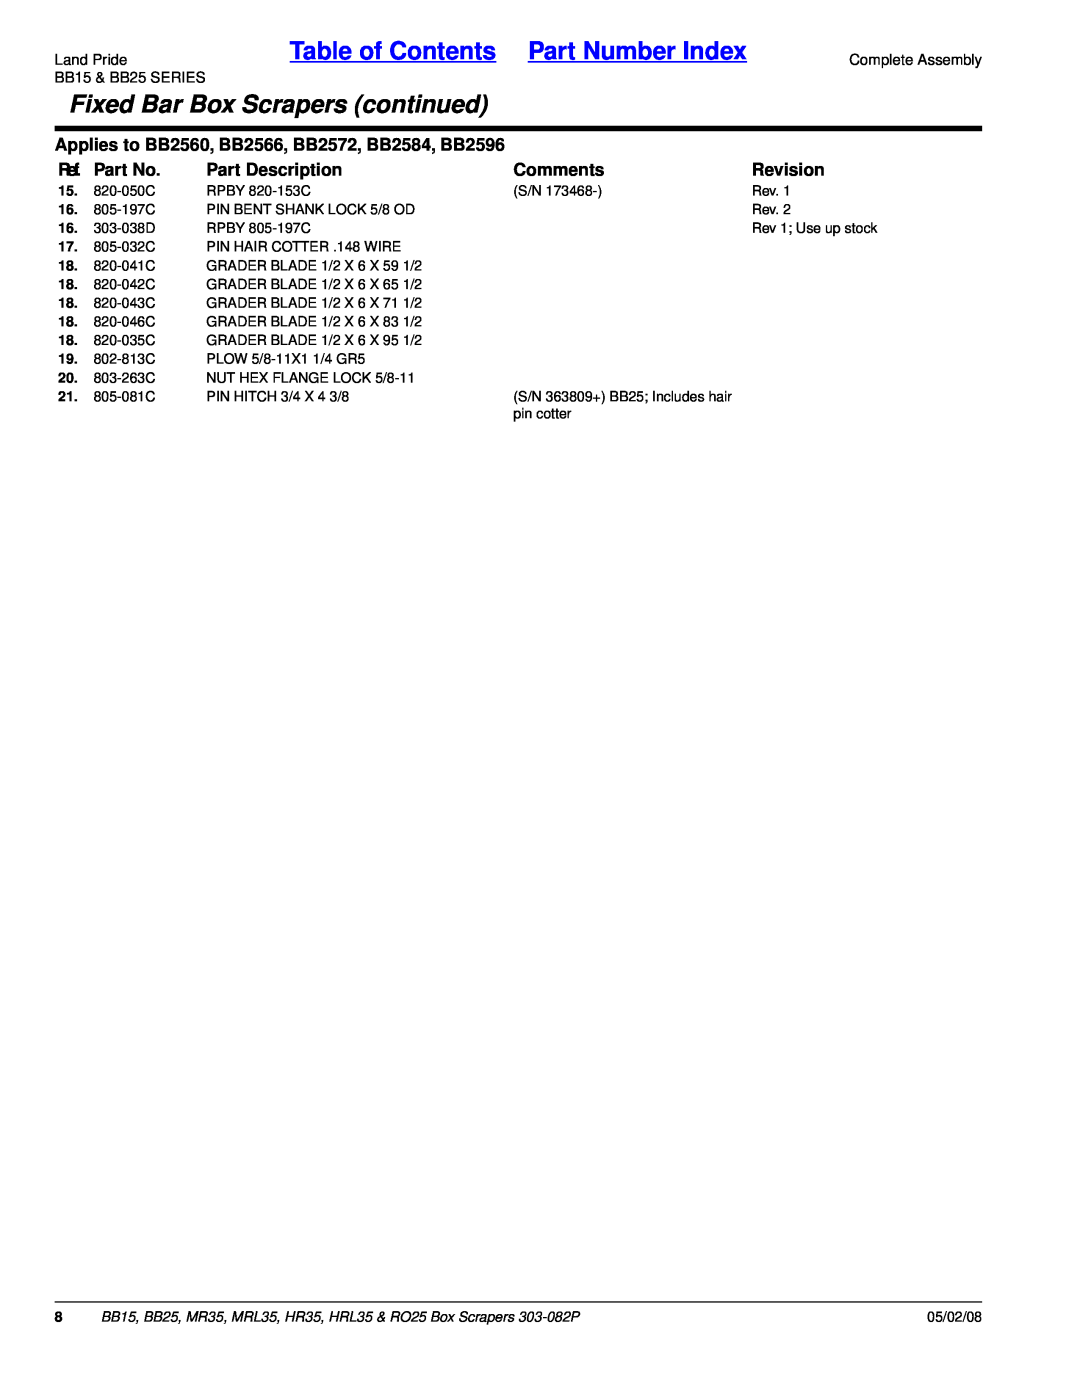 Land Pride HR35 Fixed Bar Box Scrapers continued, Table of Contents Part Number Index, Ref. Part No, Part Description 